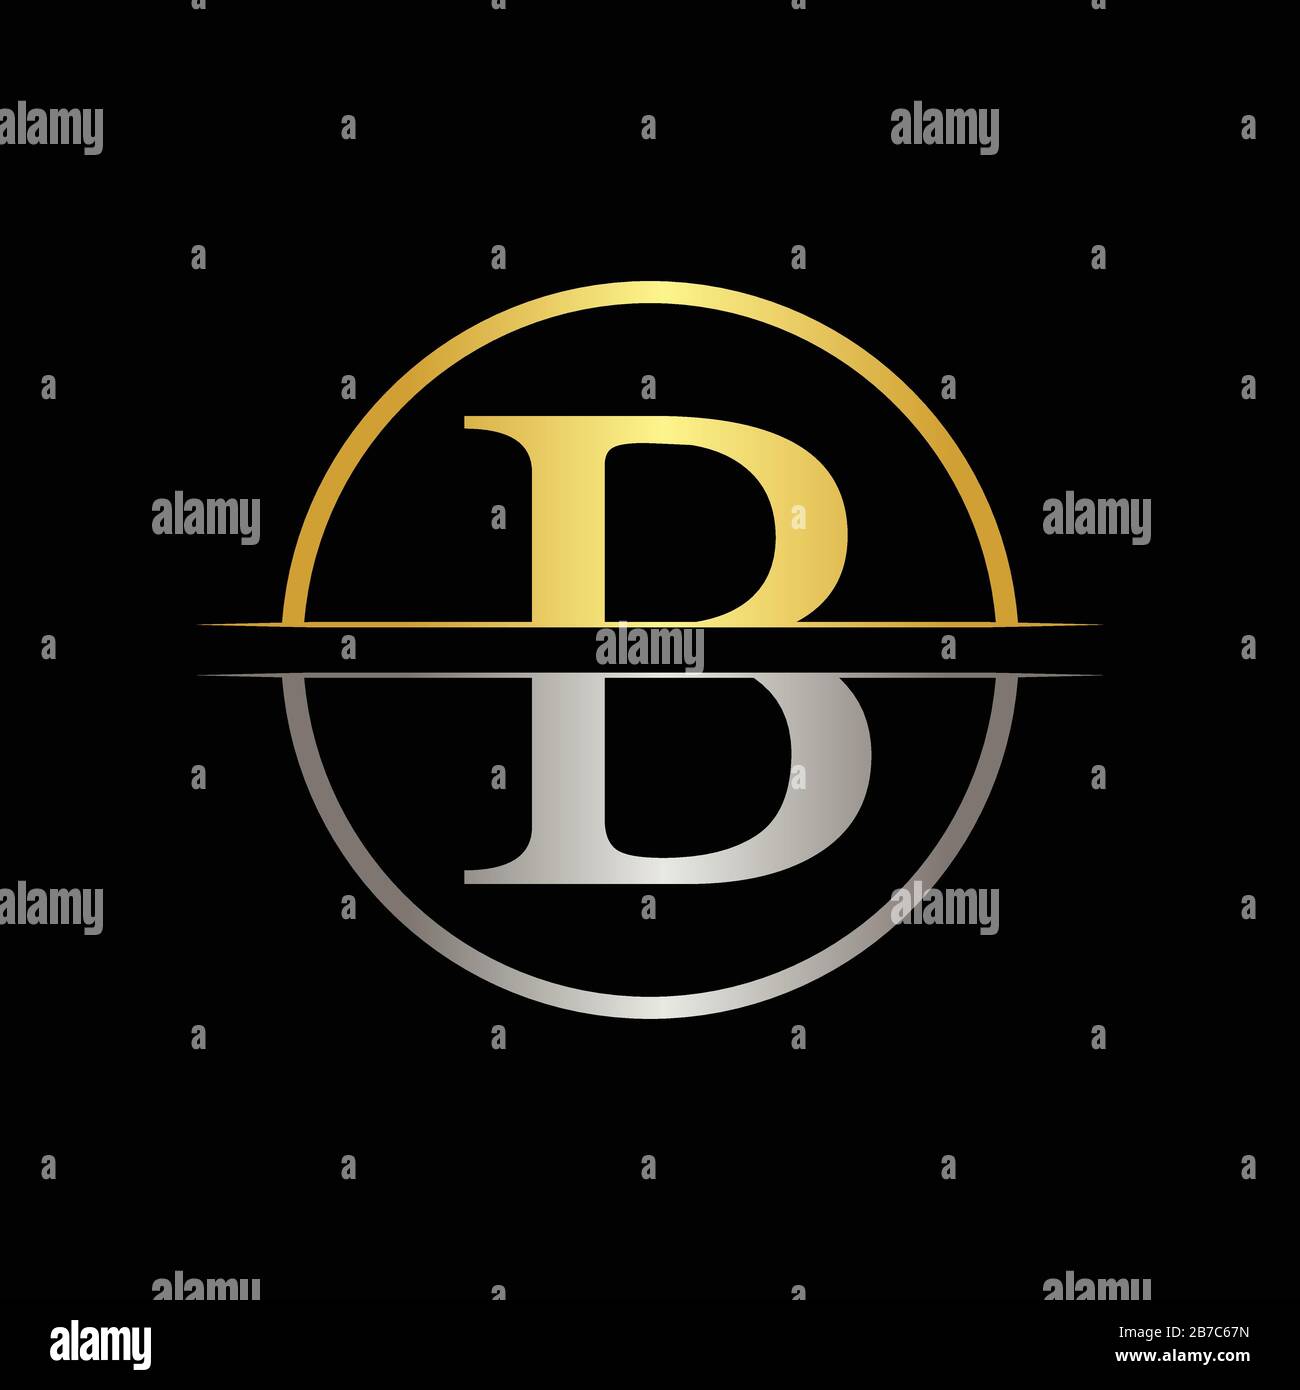 Initial Letter B Logo Design Business Vector Template. Creative Abstract Letter B Logo Vector Stock Vector